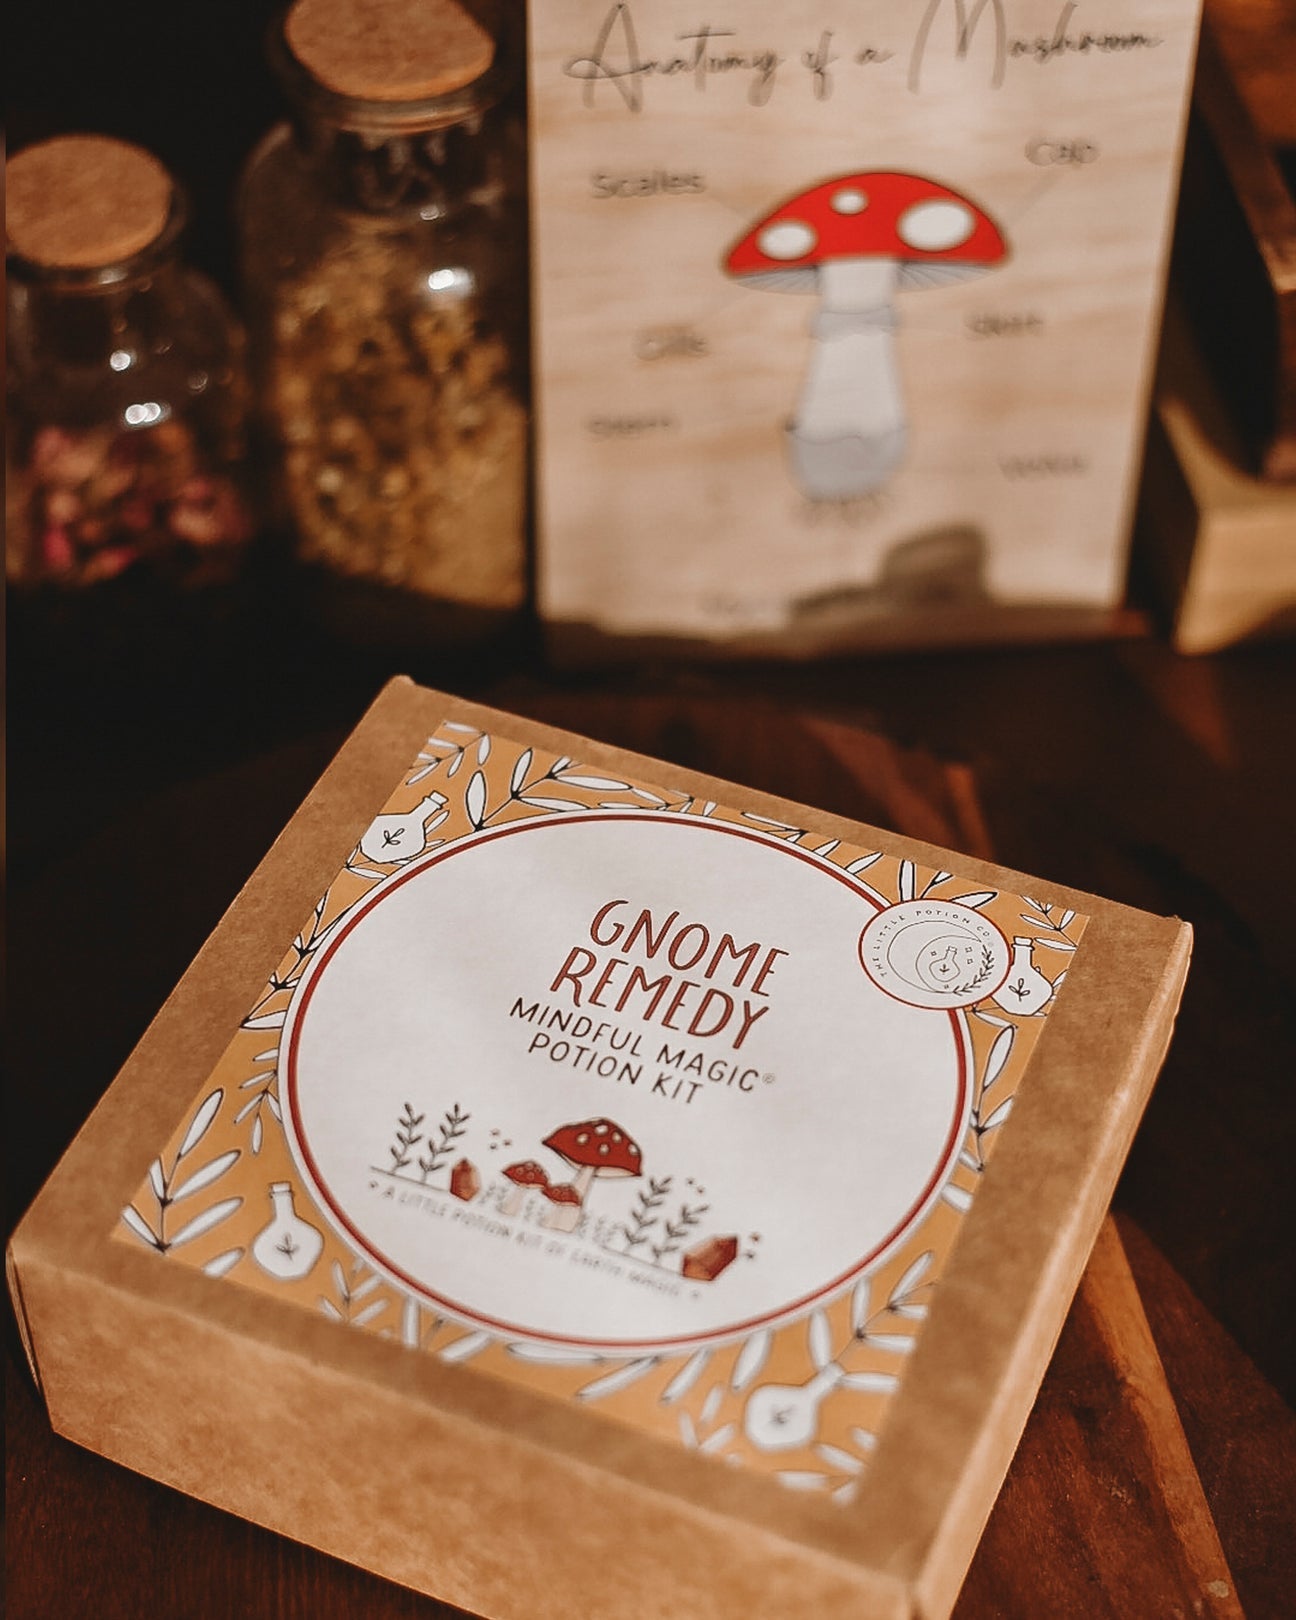 The Little Potion Co. Gnome Remedy - Mindful Potion Kit